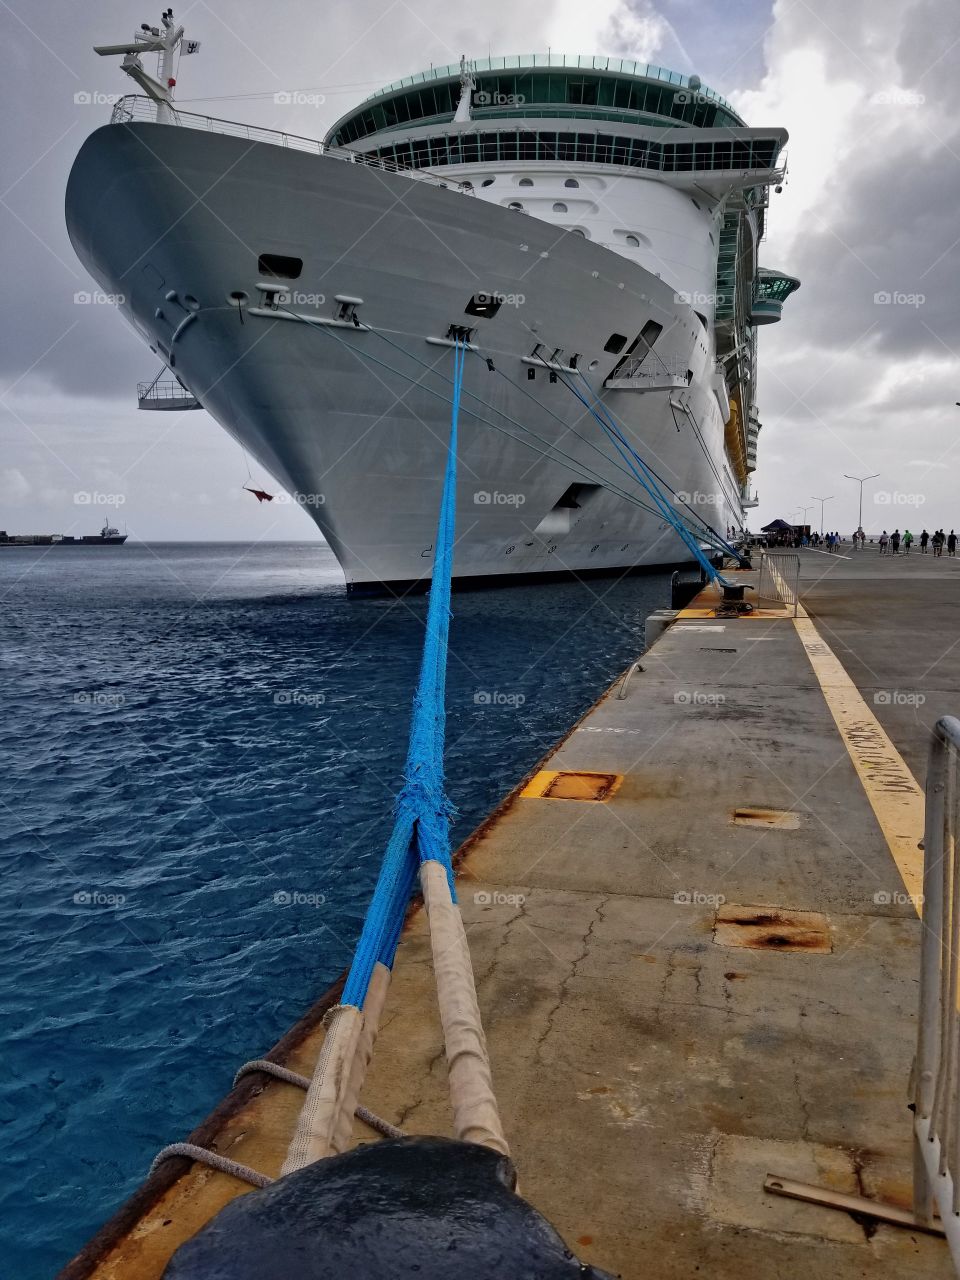 Cruise ship docked in Port St Maarten